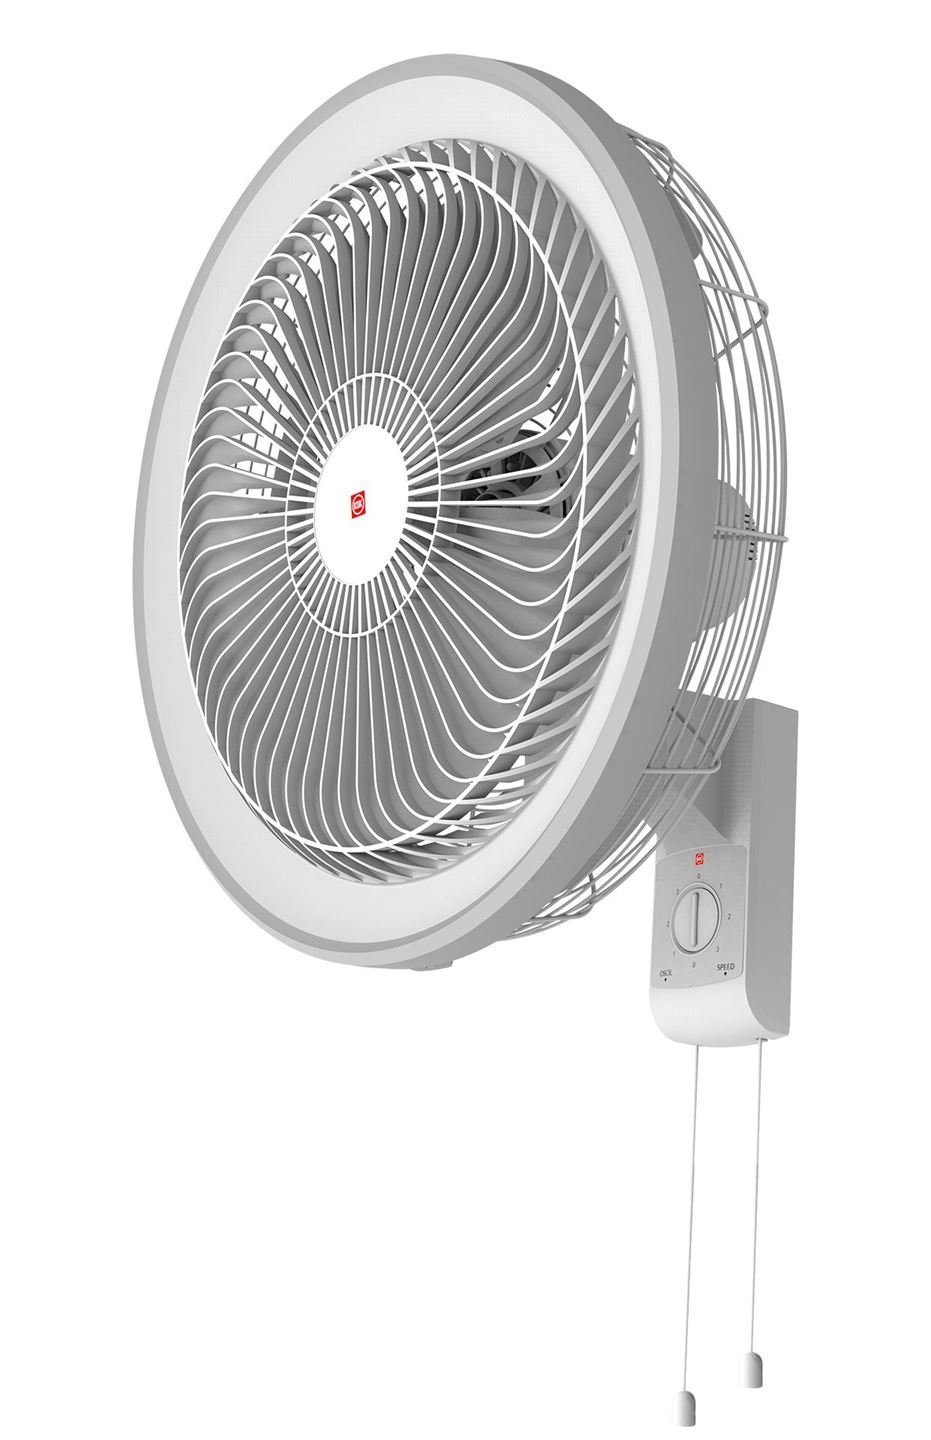 KDK announces its Brand new 50cm Wall Fan Featuring Long Reach Airflow